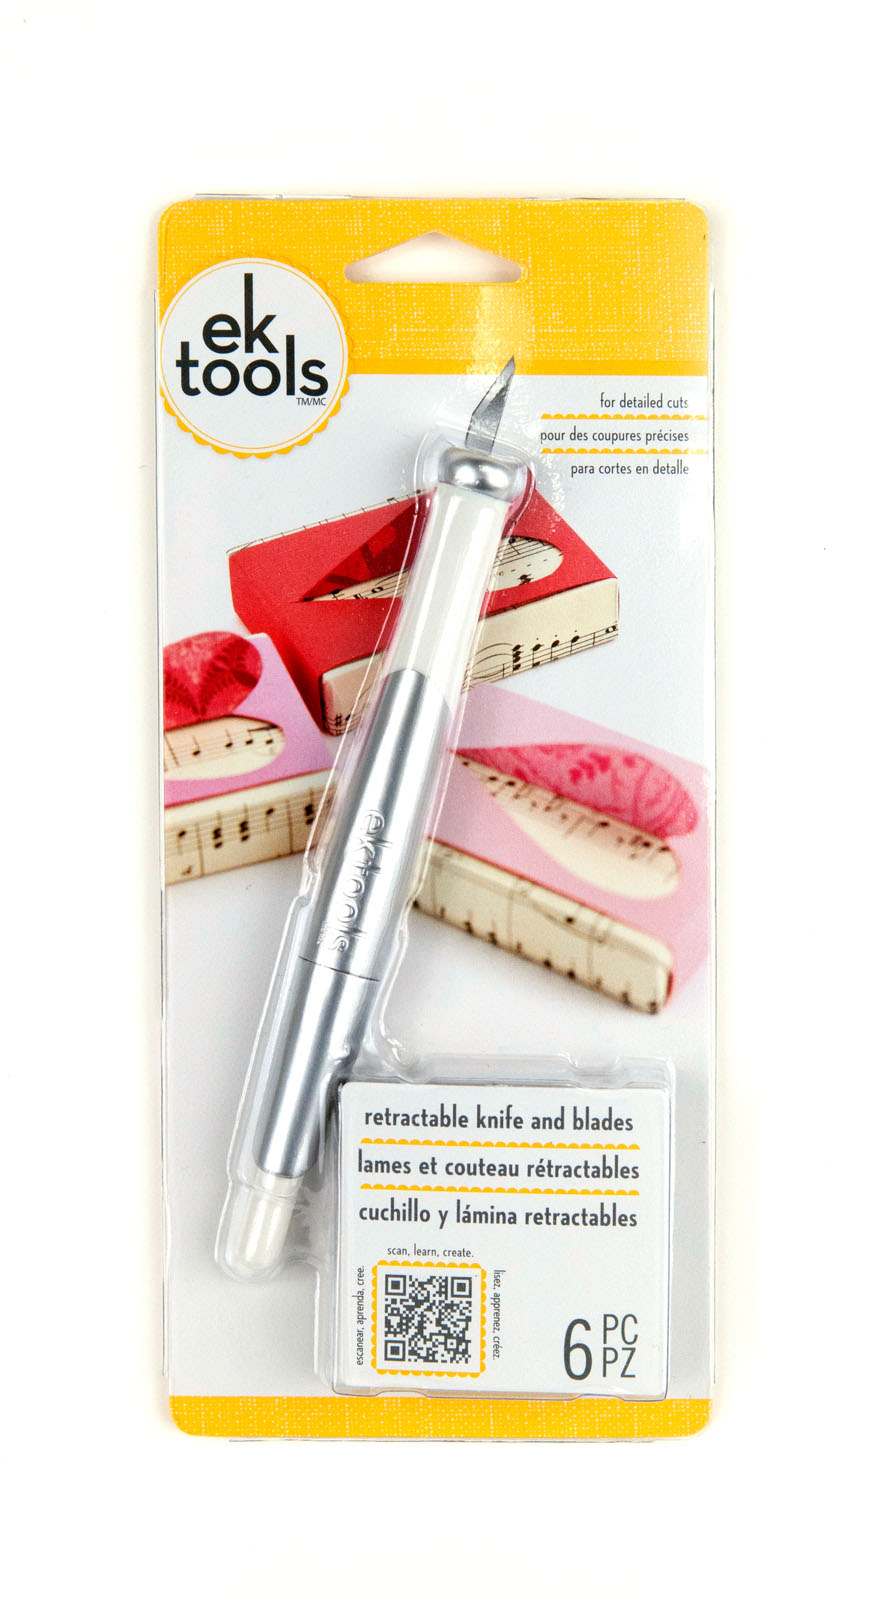 EK tools • Retractable knife and blades